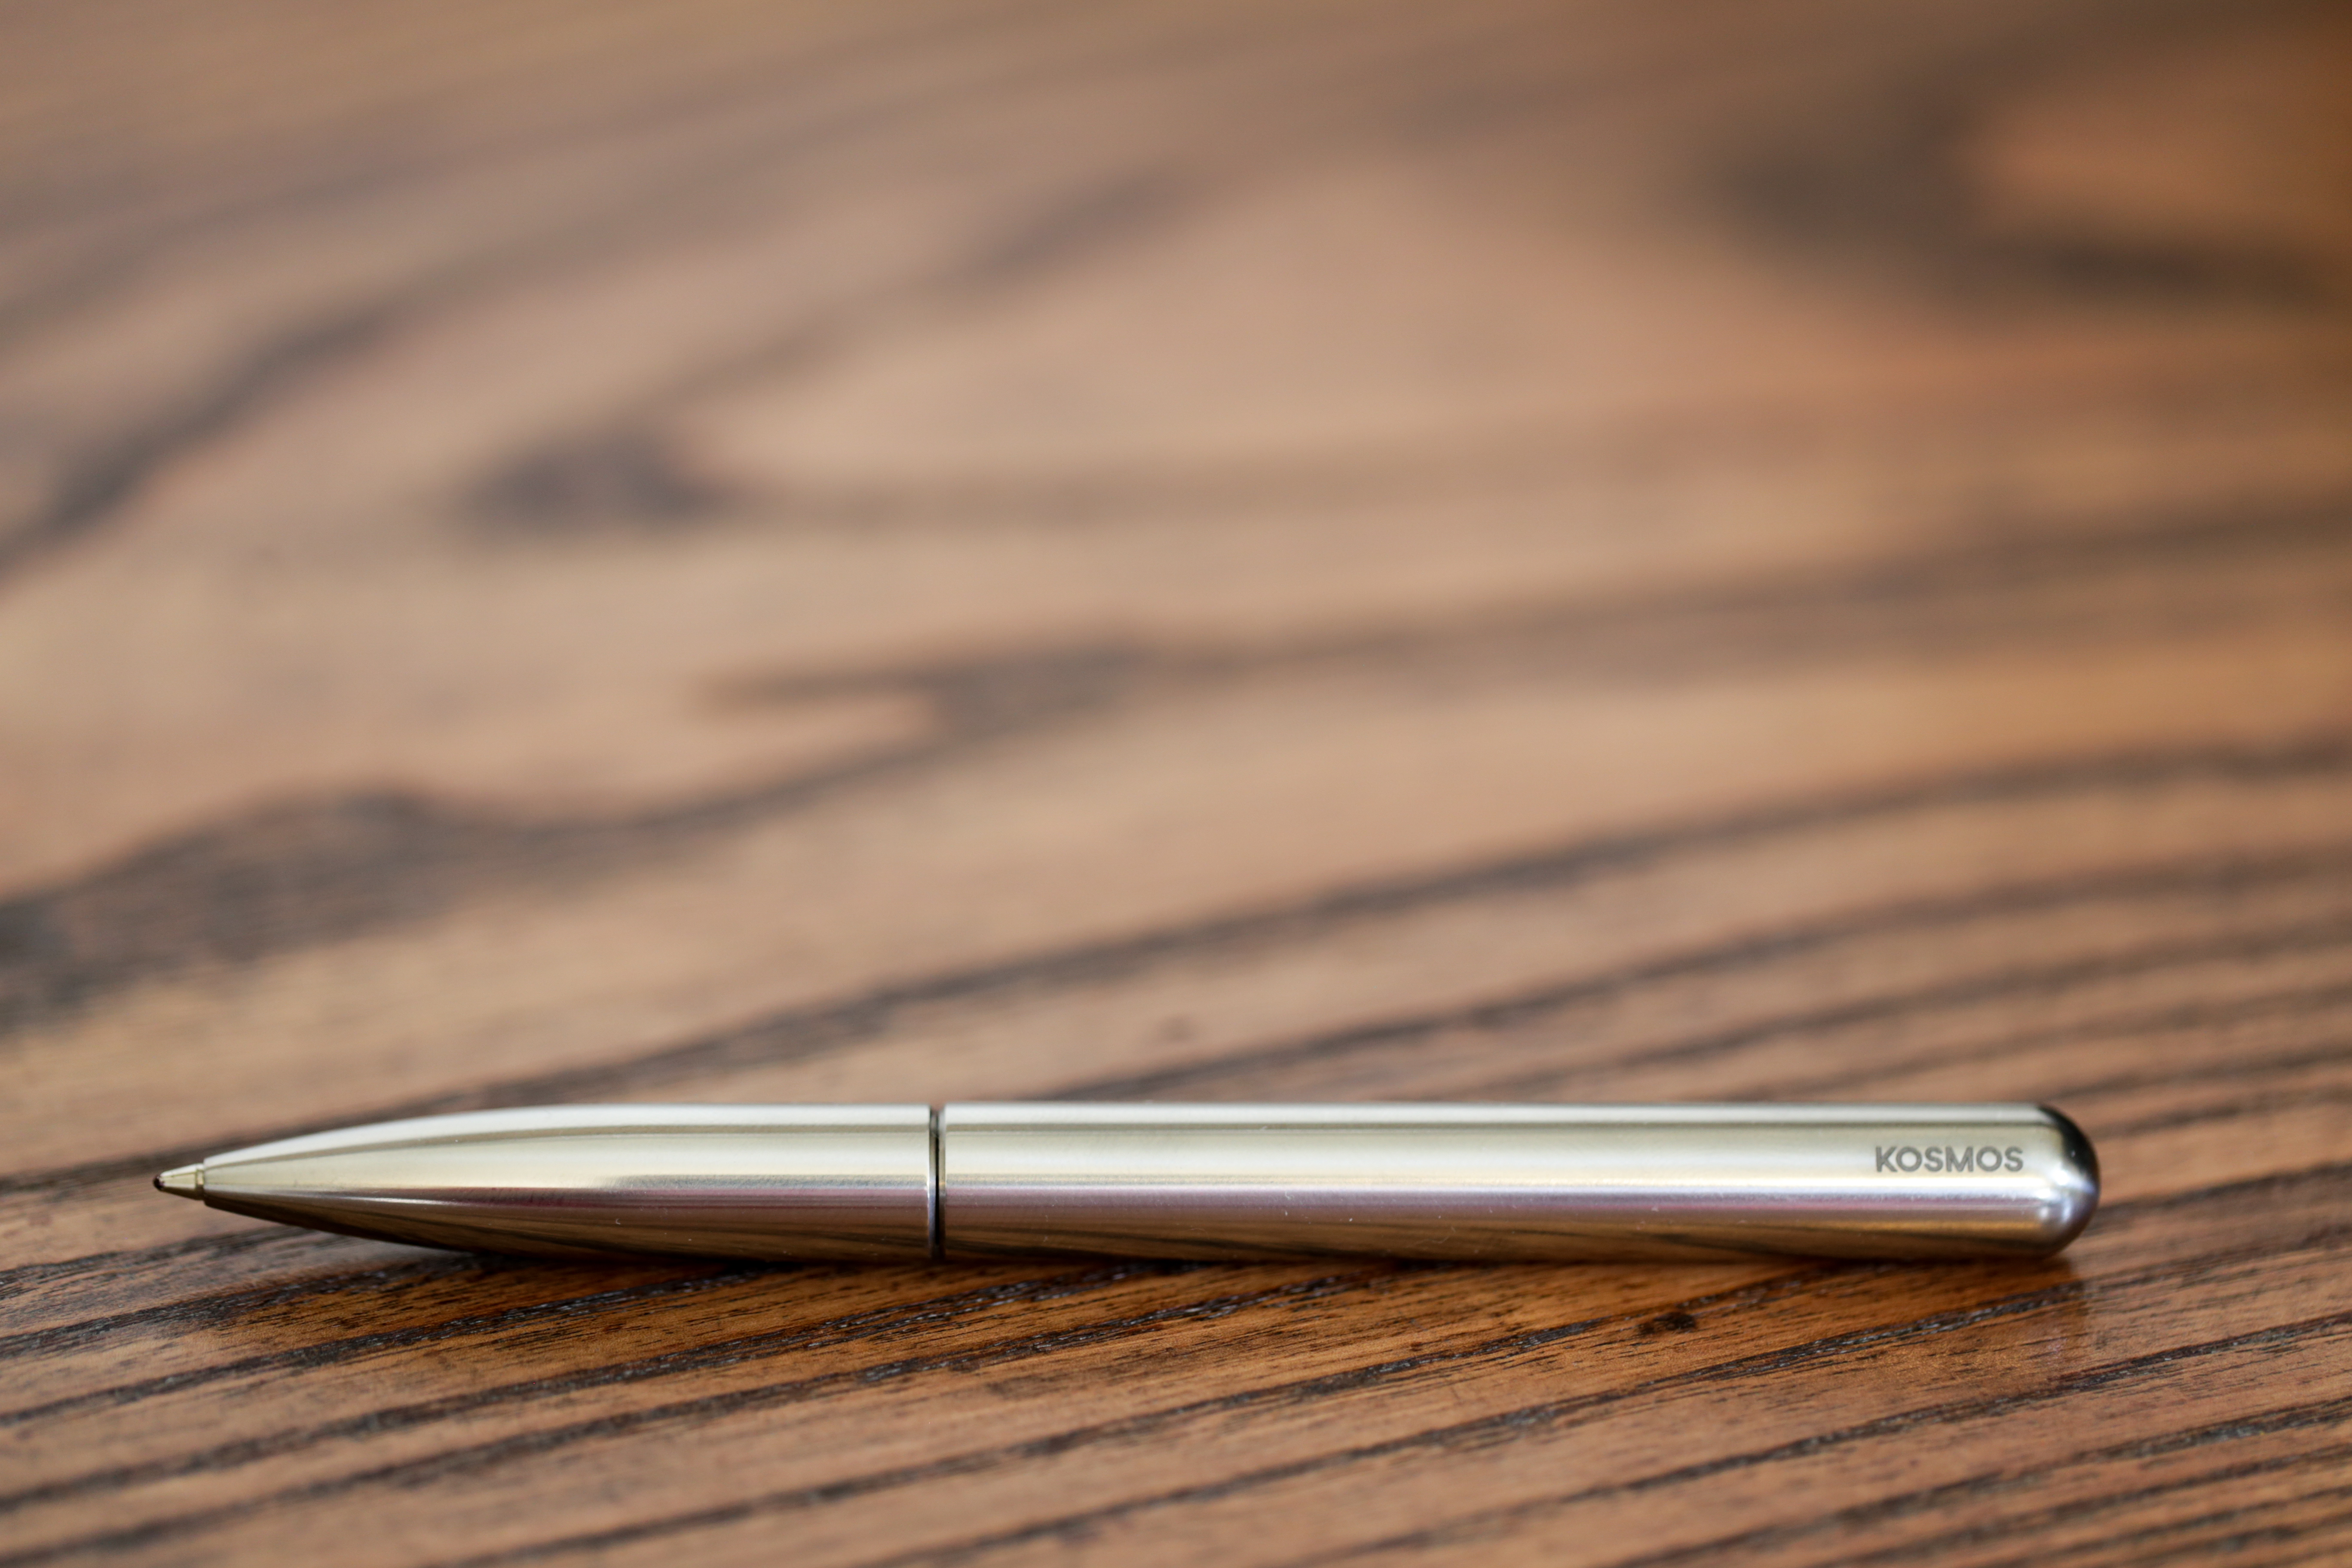 Dekorative Blossom forkorte Stilform's Kosmos pen is a polished titanium delight | TechCrunch